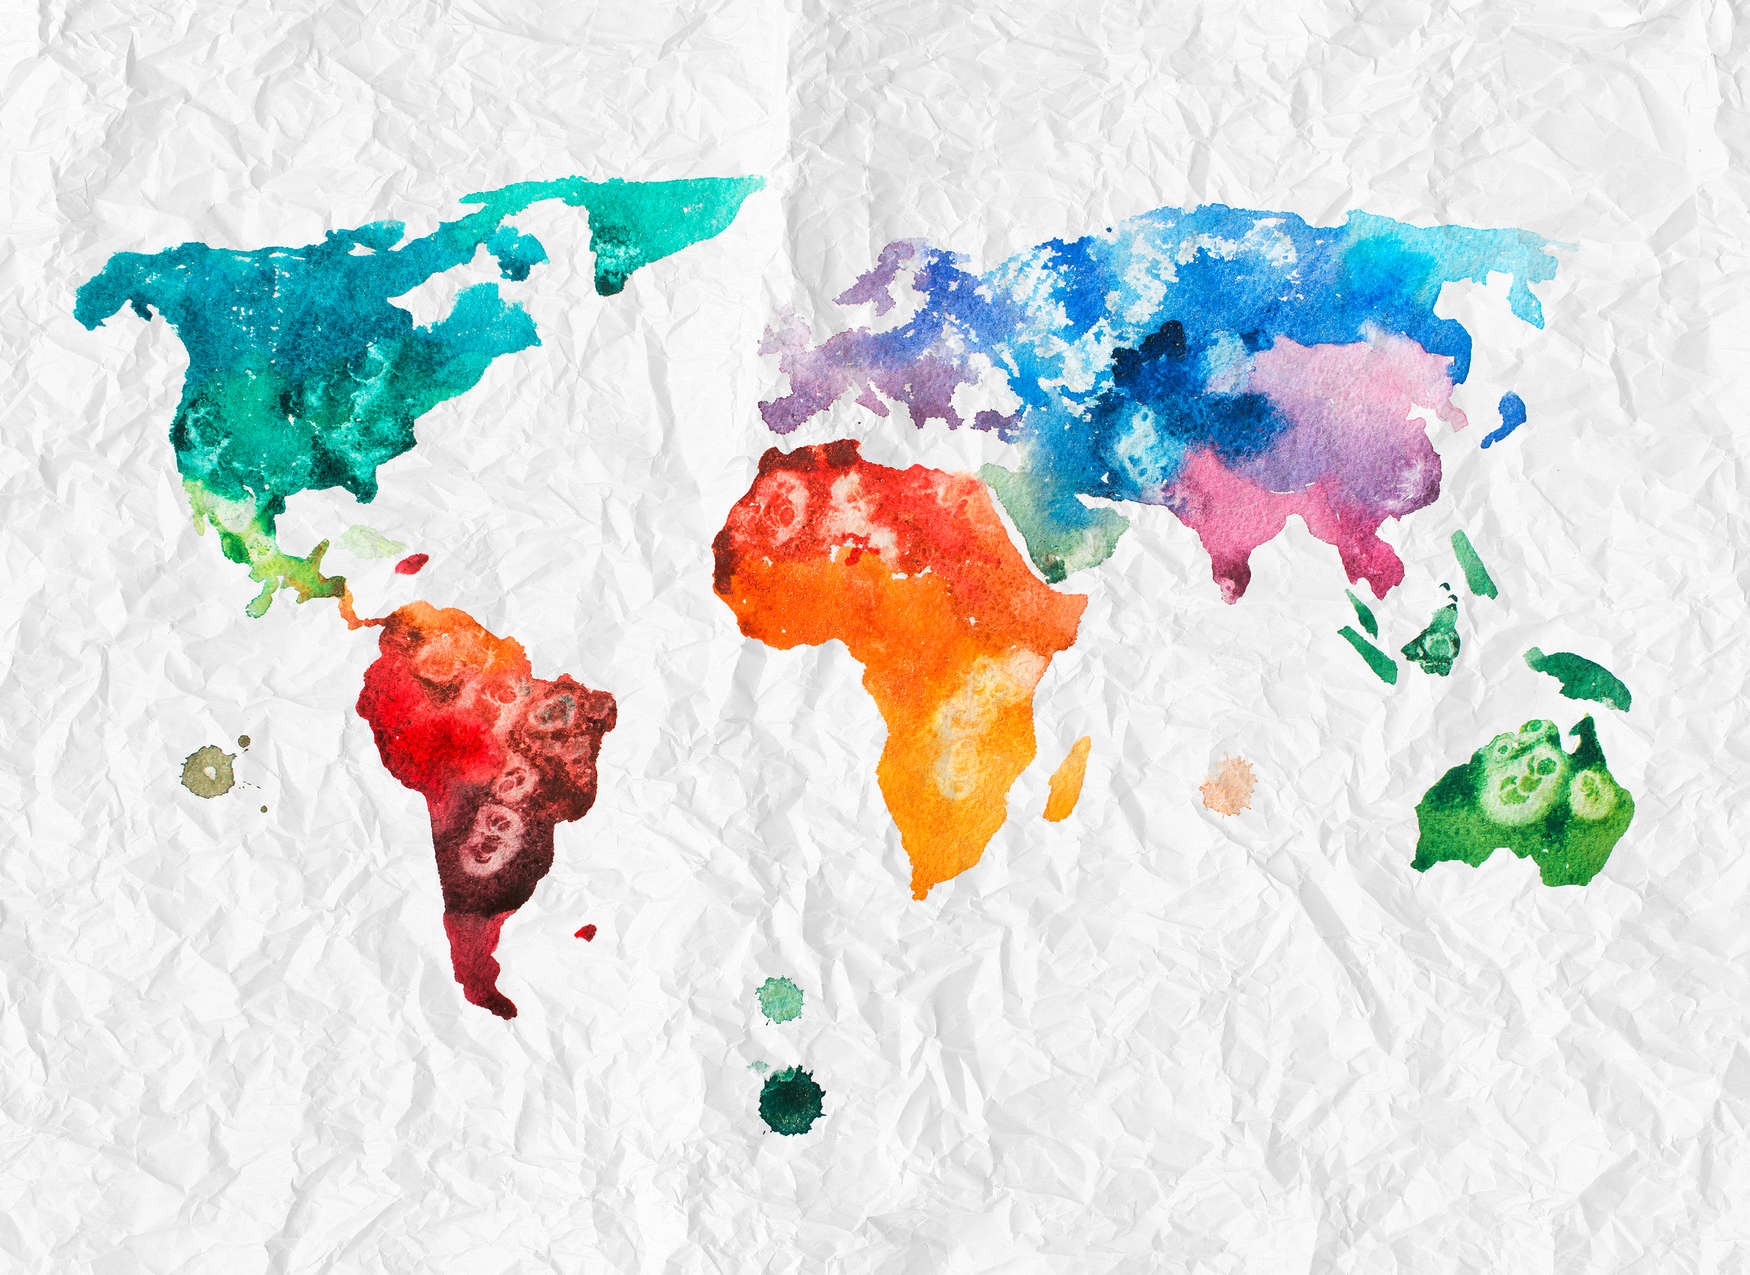             World Map Wallpaper Watercolour - Colourful, White
        